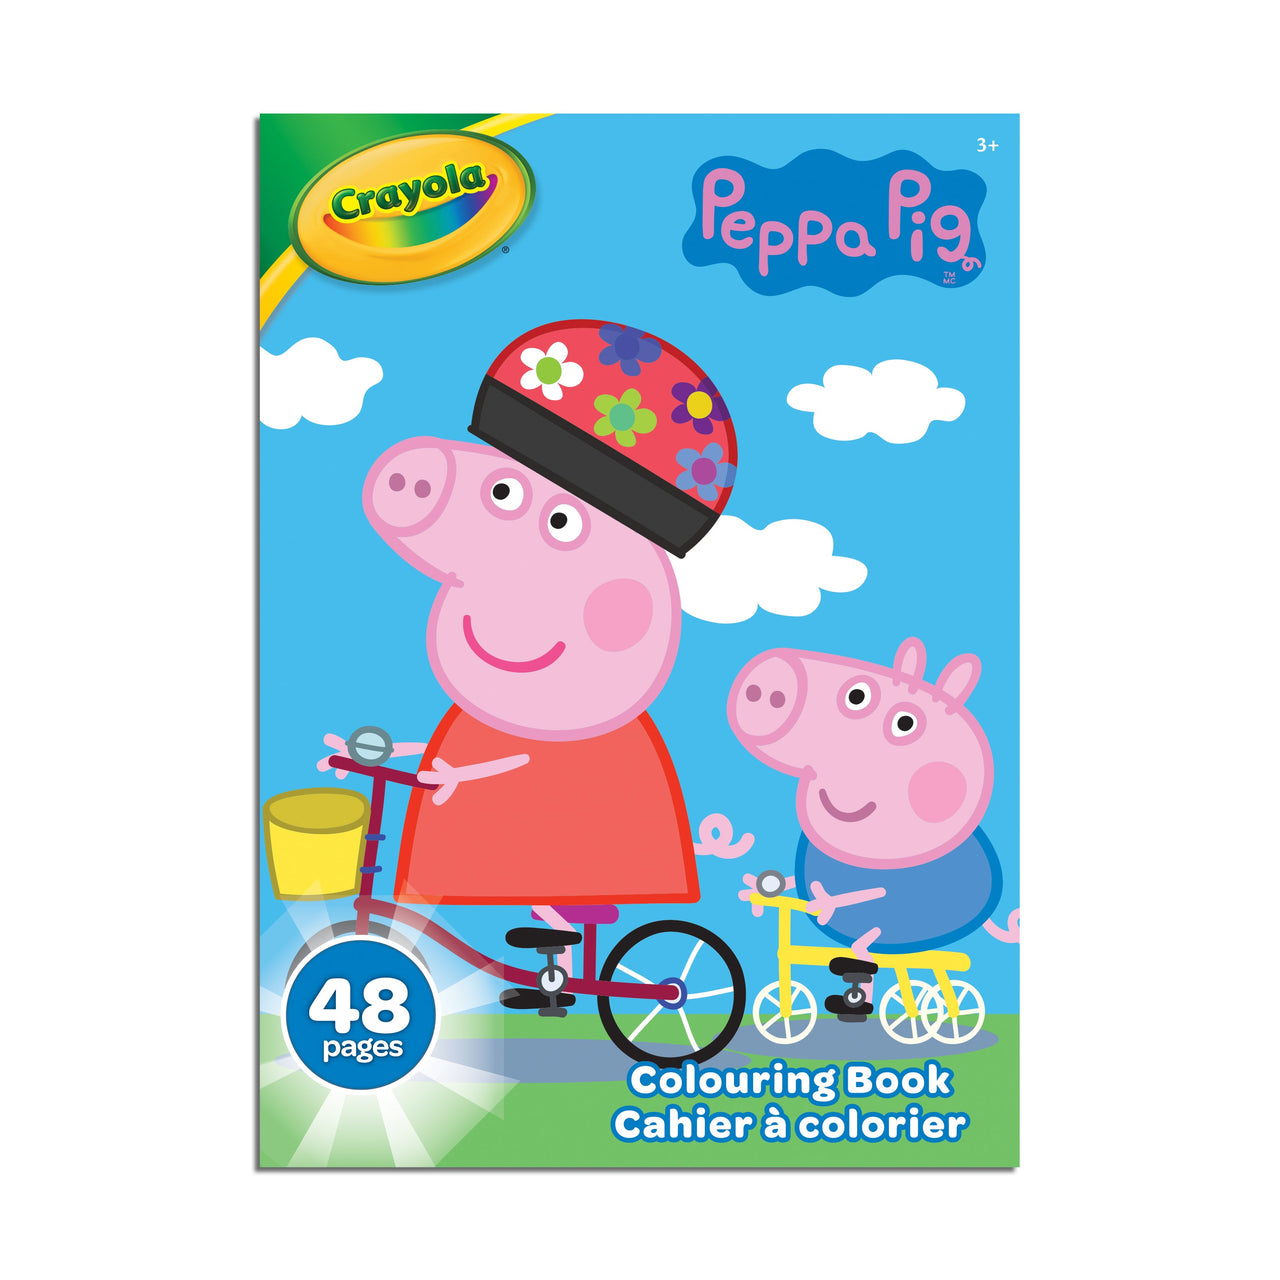 Crayola Colouring Book- Peppa Pig + Paw Patrol